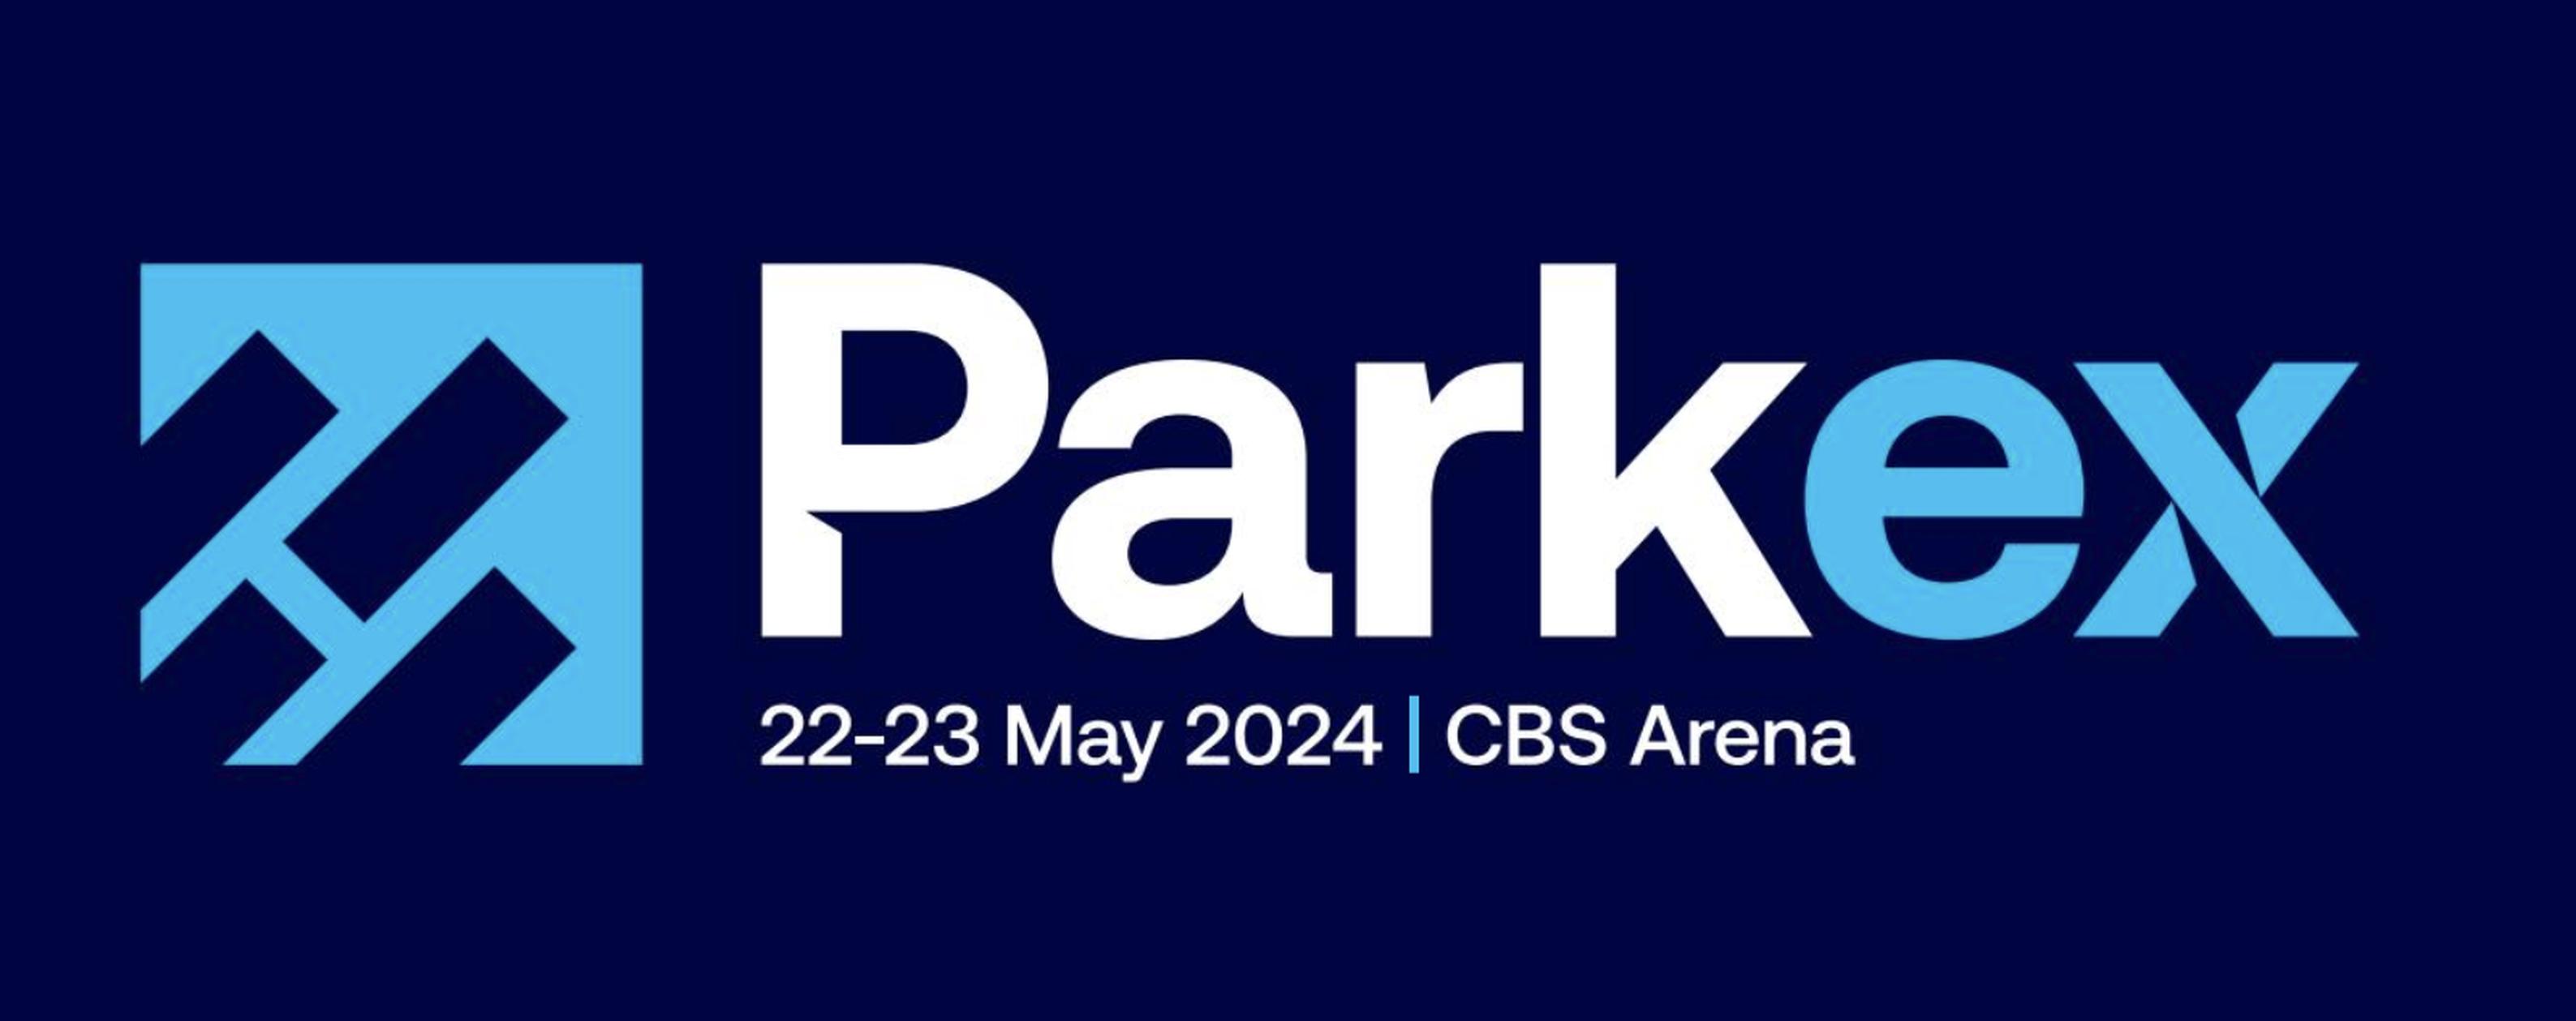 Parkex 2024: The preview